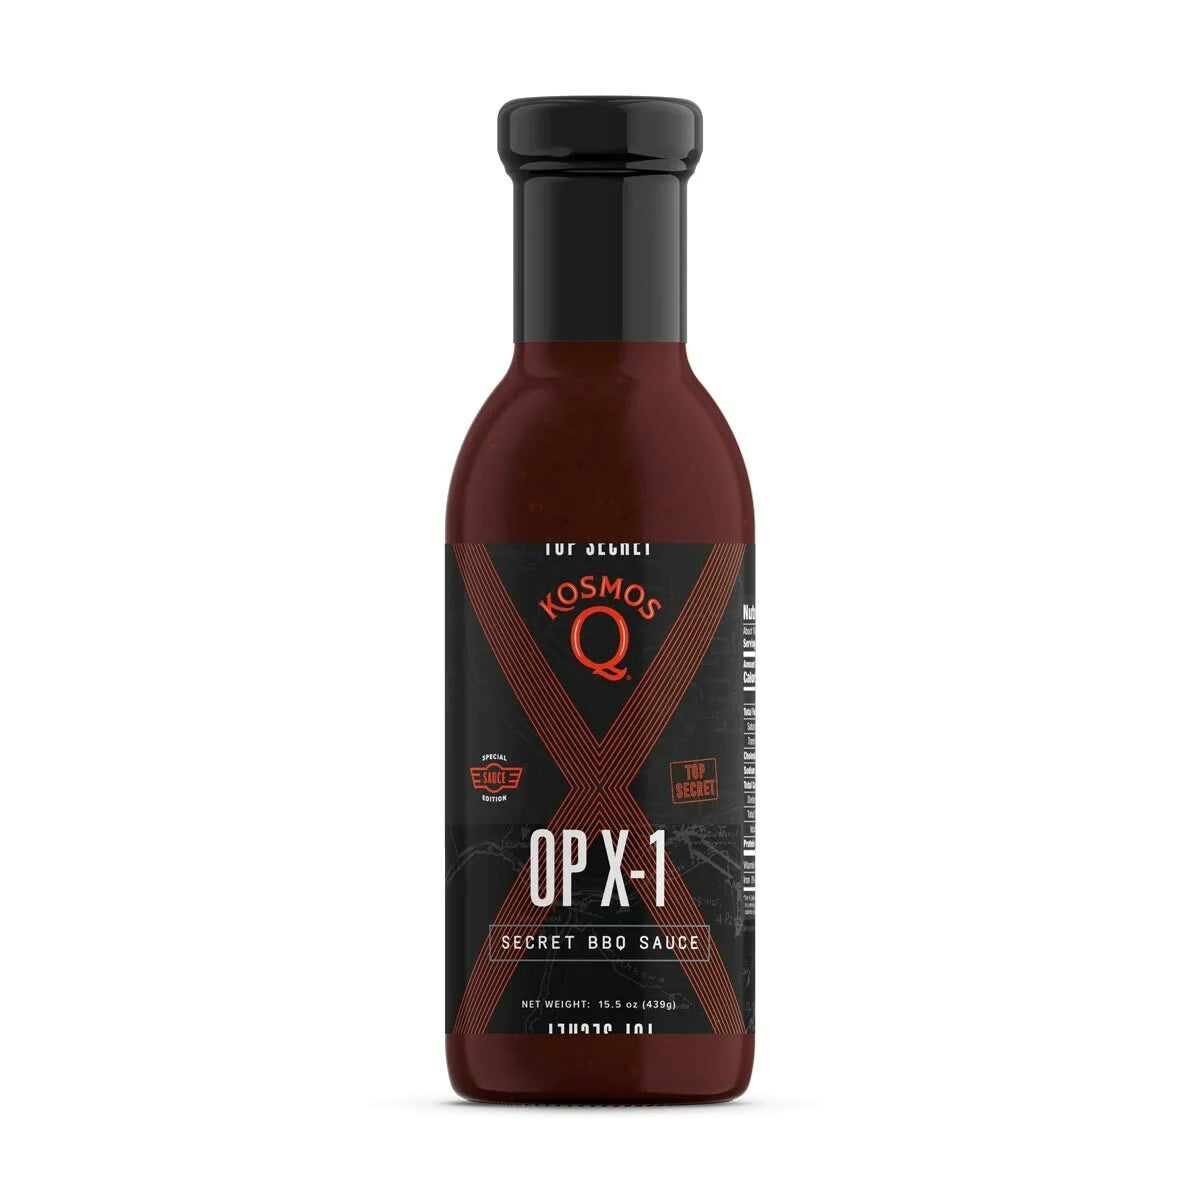 Kosmos Q - OP X-1 BBQ Sauce